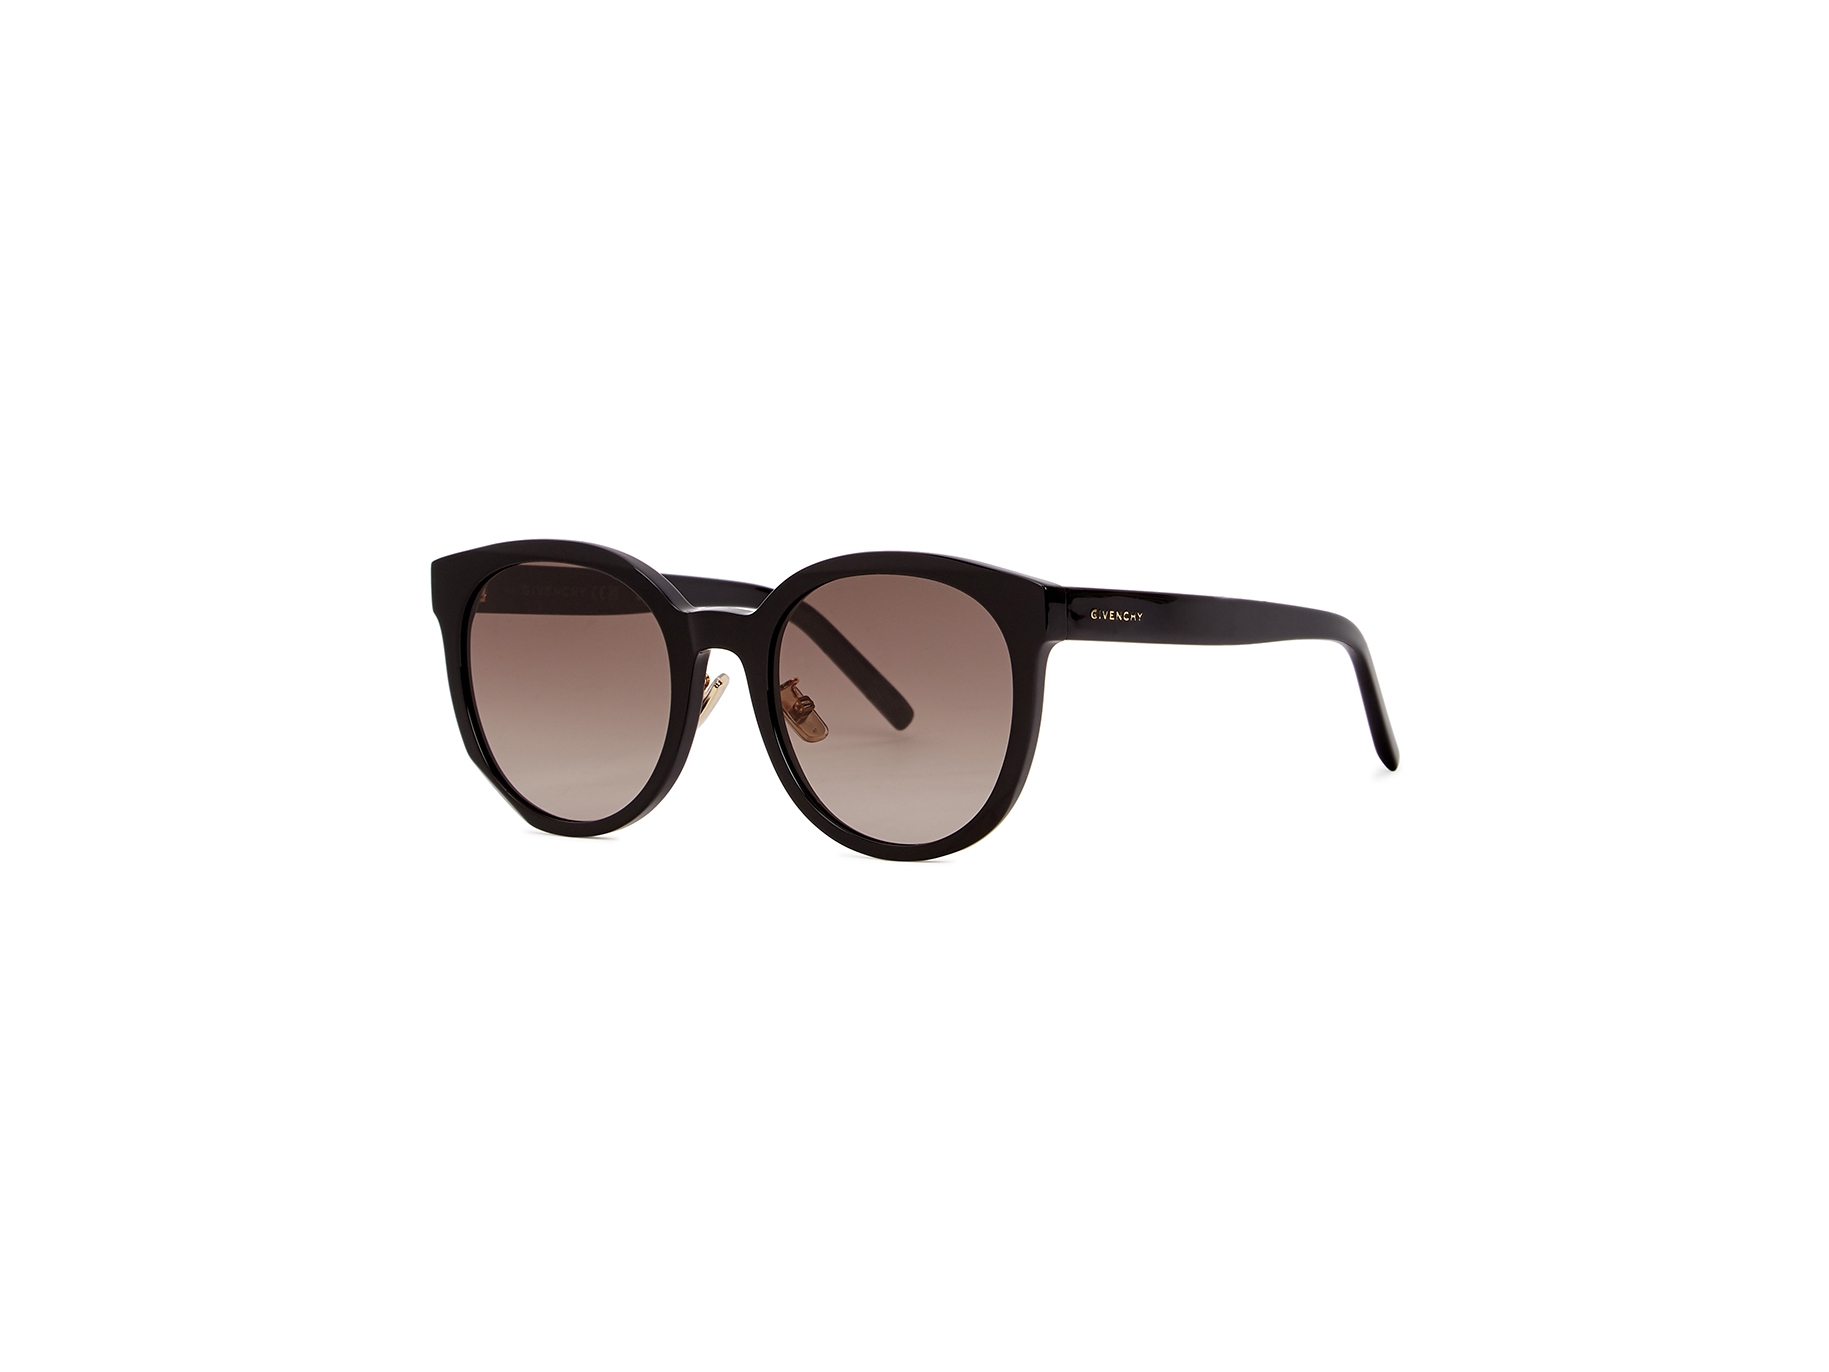 Givenchy Tortoiseshell round-frame sunglasses - Harvey Nichols